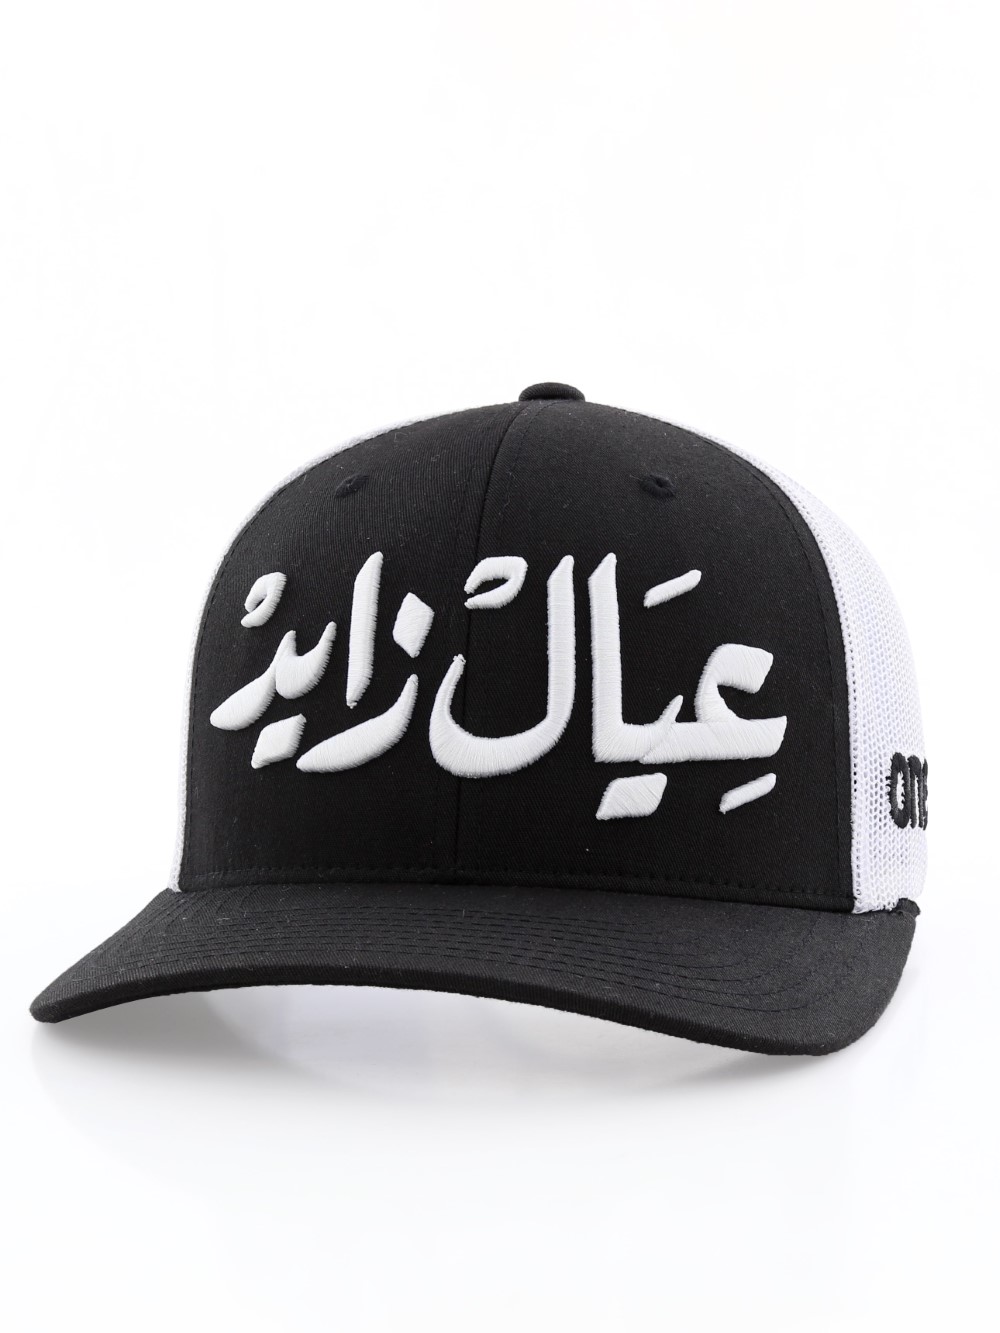 One8 3Yal Zayed Calligraphy Curved Brim Trucker Hat Unisex Cap Osfa